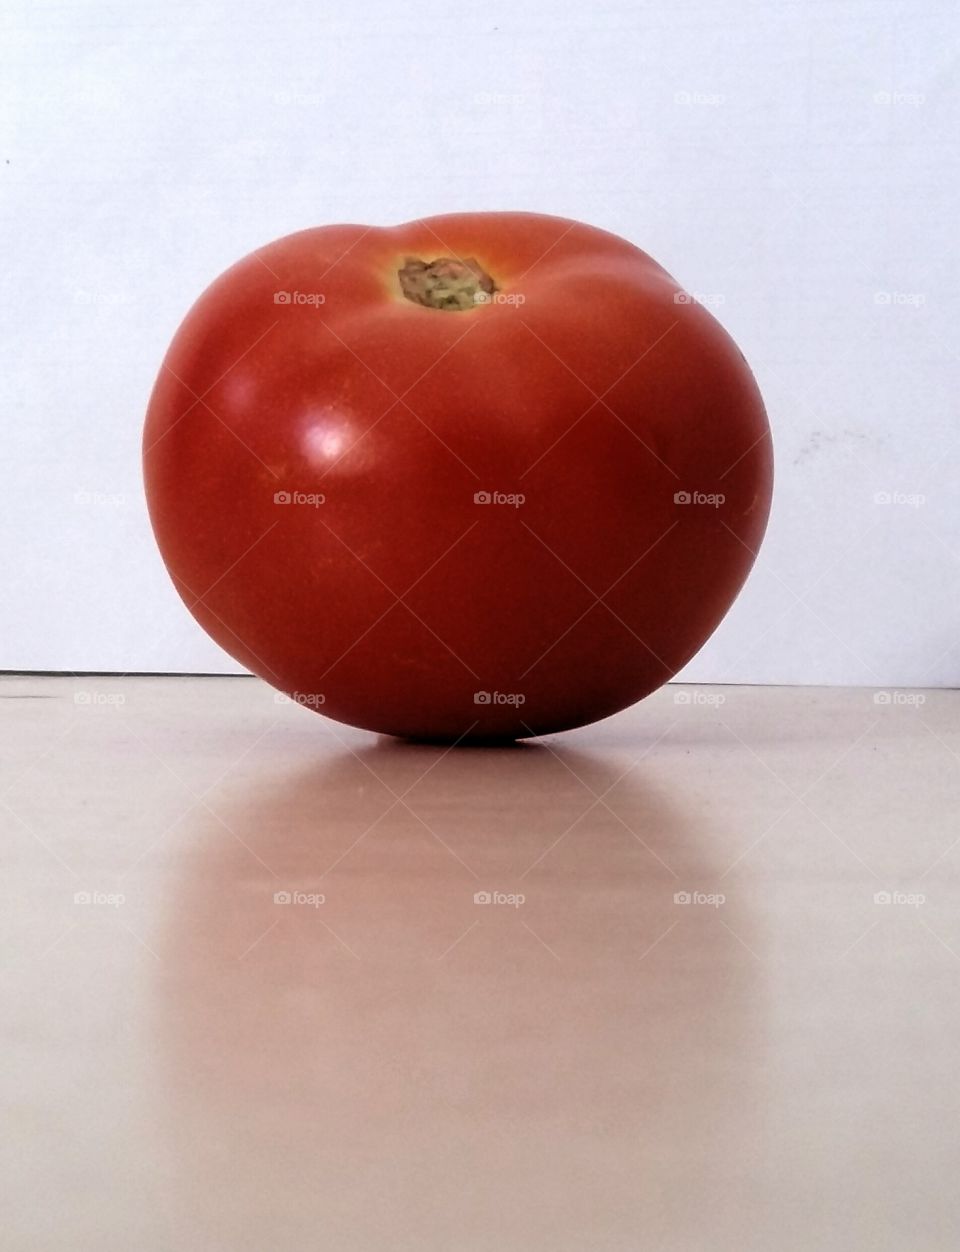 tomatoe .. tomate .. tomato